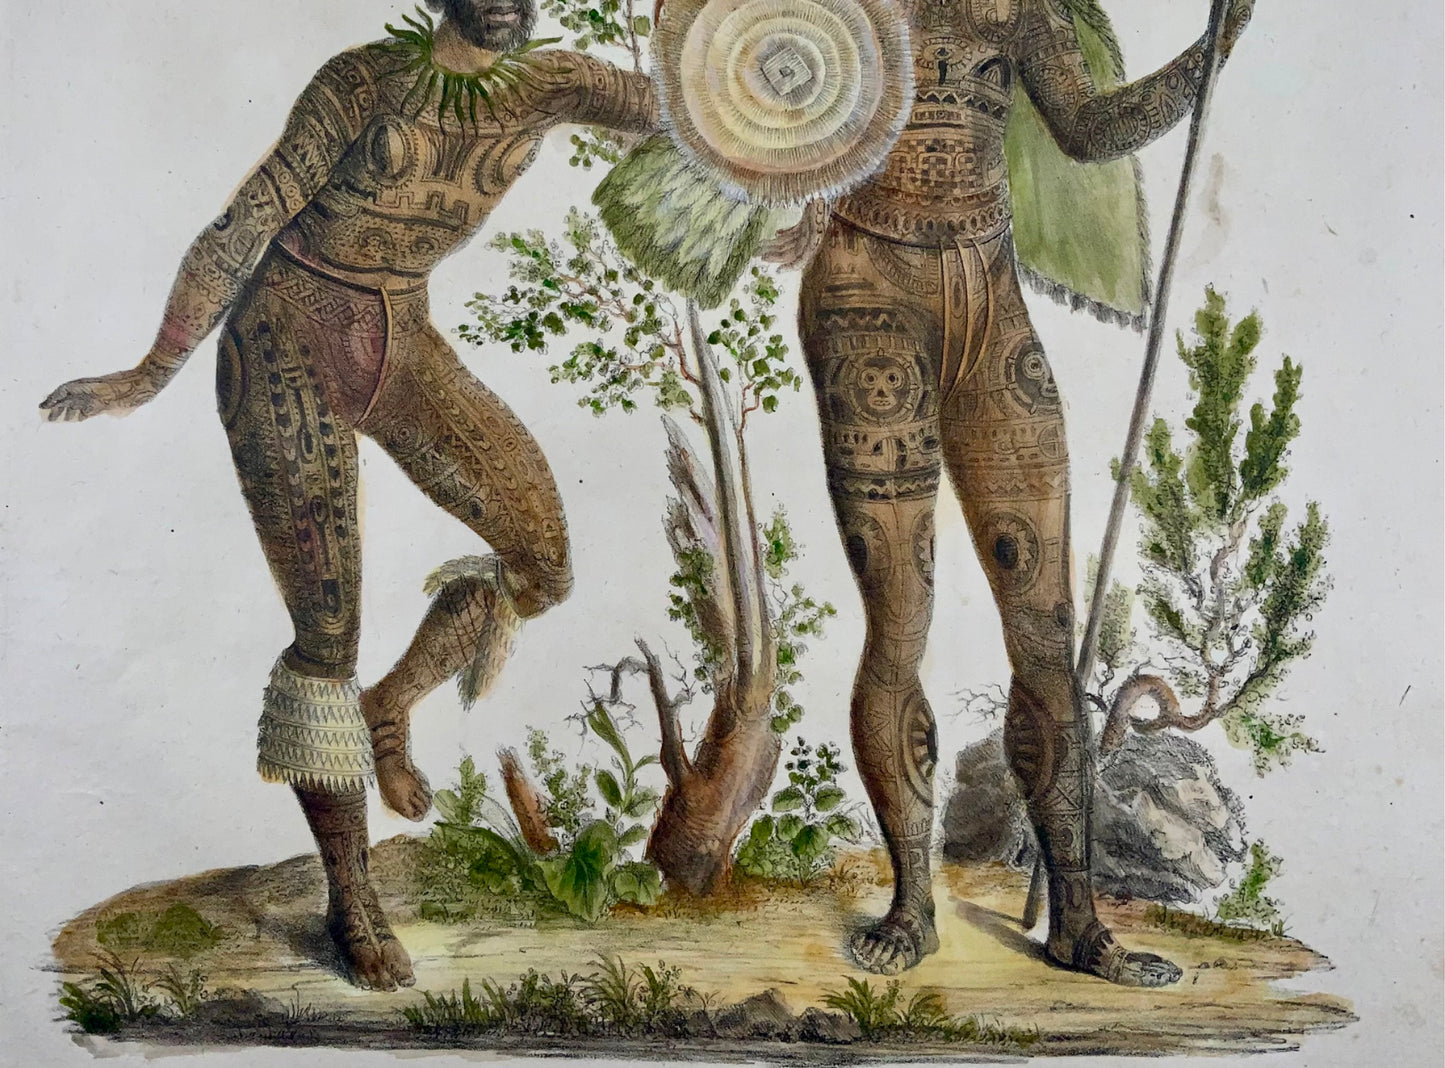 1816 Tattooed Polynesian, Imperial folio, 42.5 cm, incunabula of lithography, ethnology